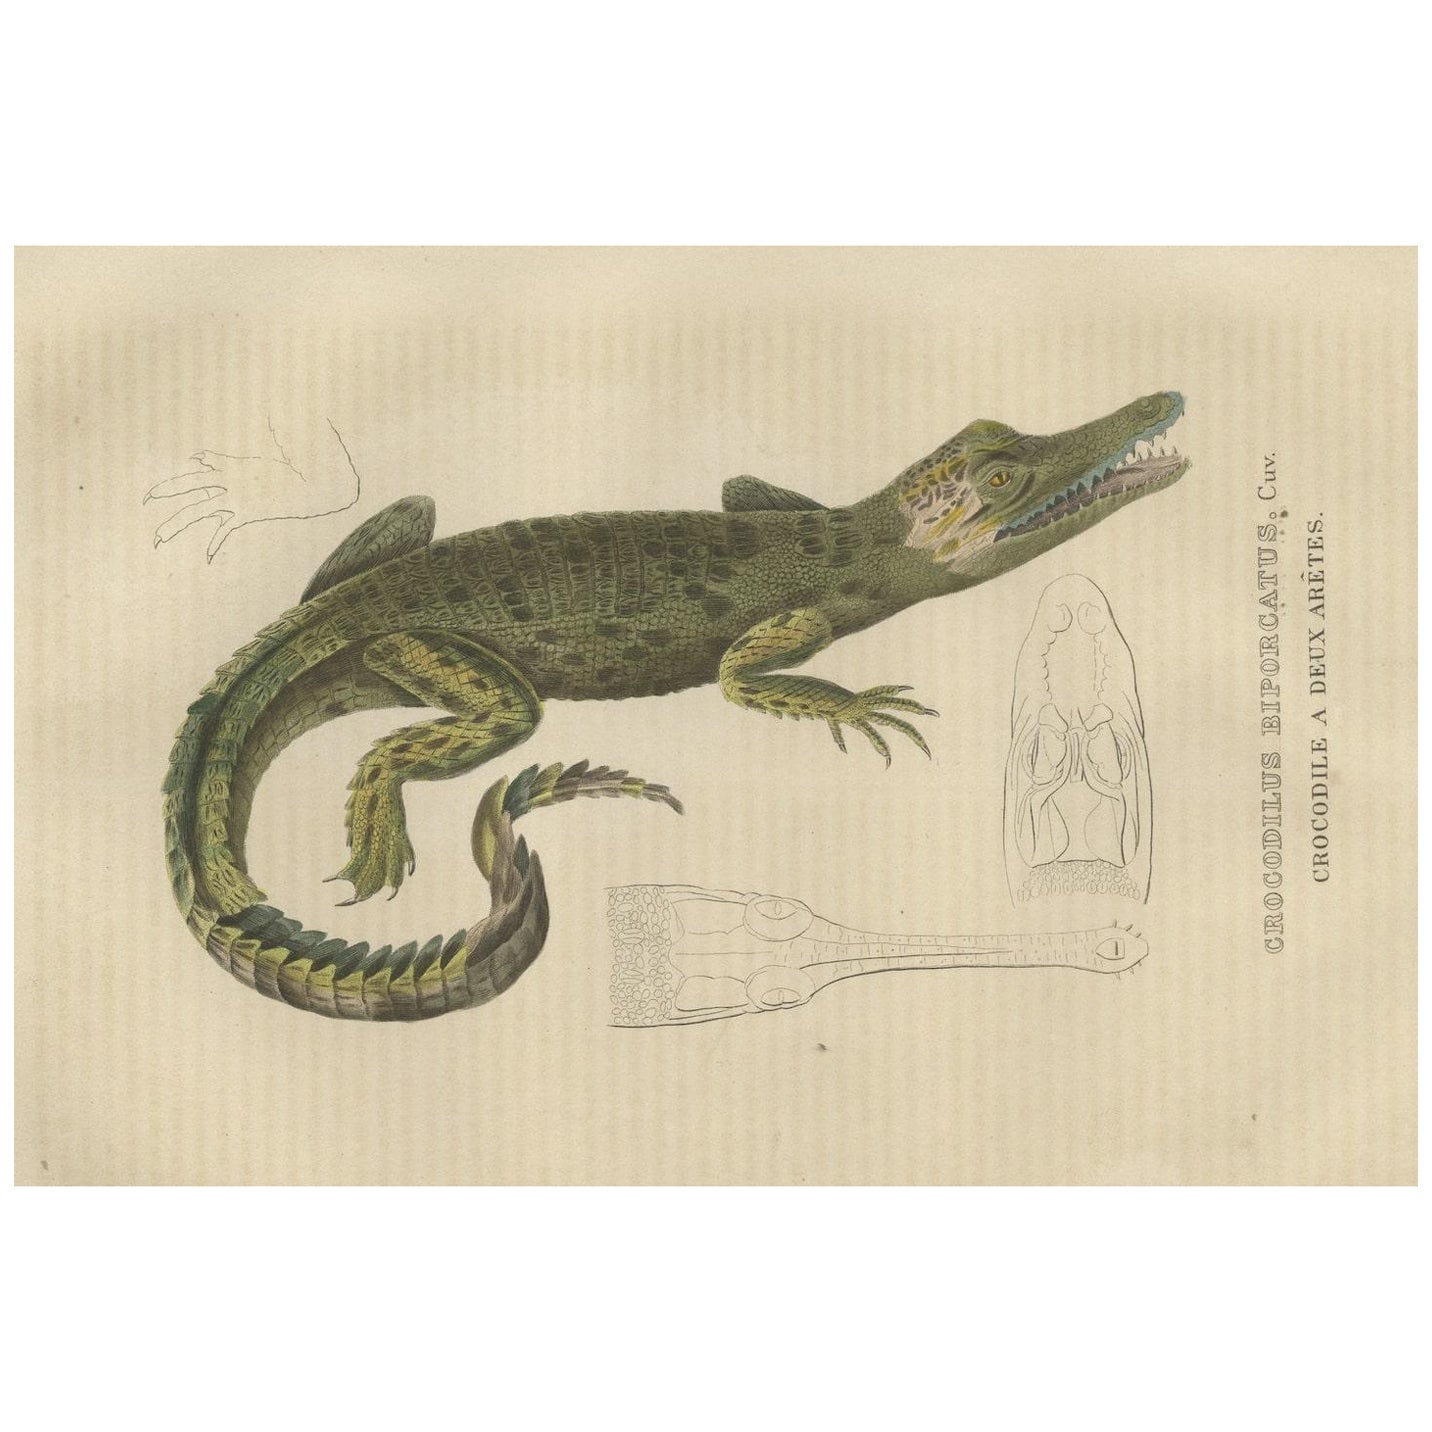 Old Hand-colored Print of a Cuban Crocodile